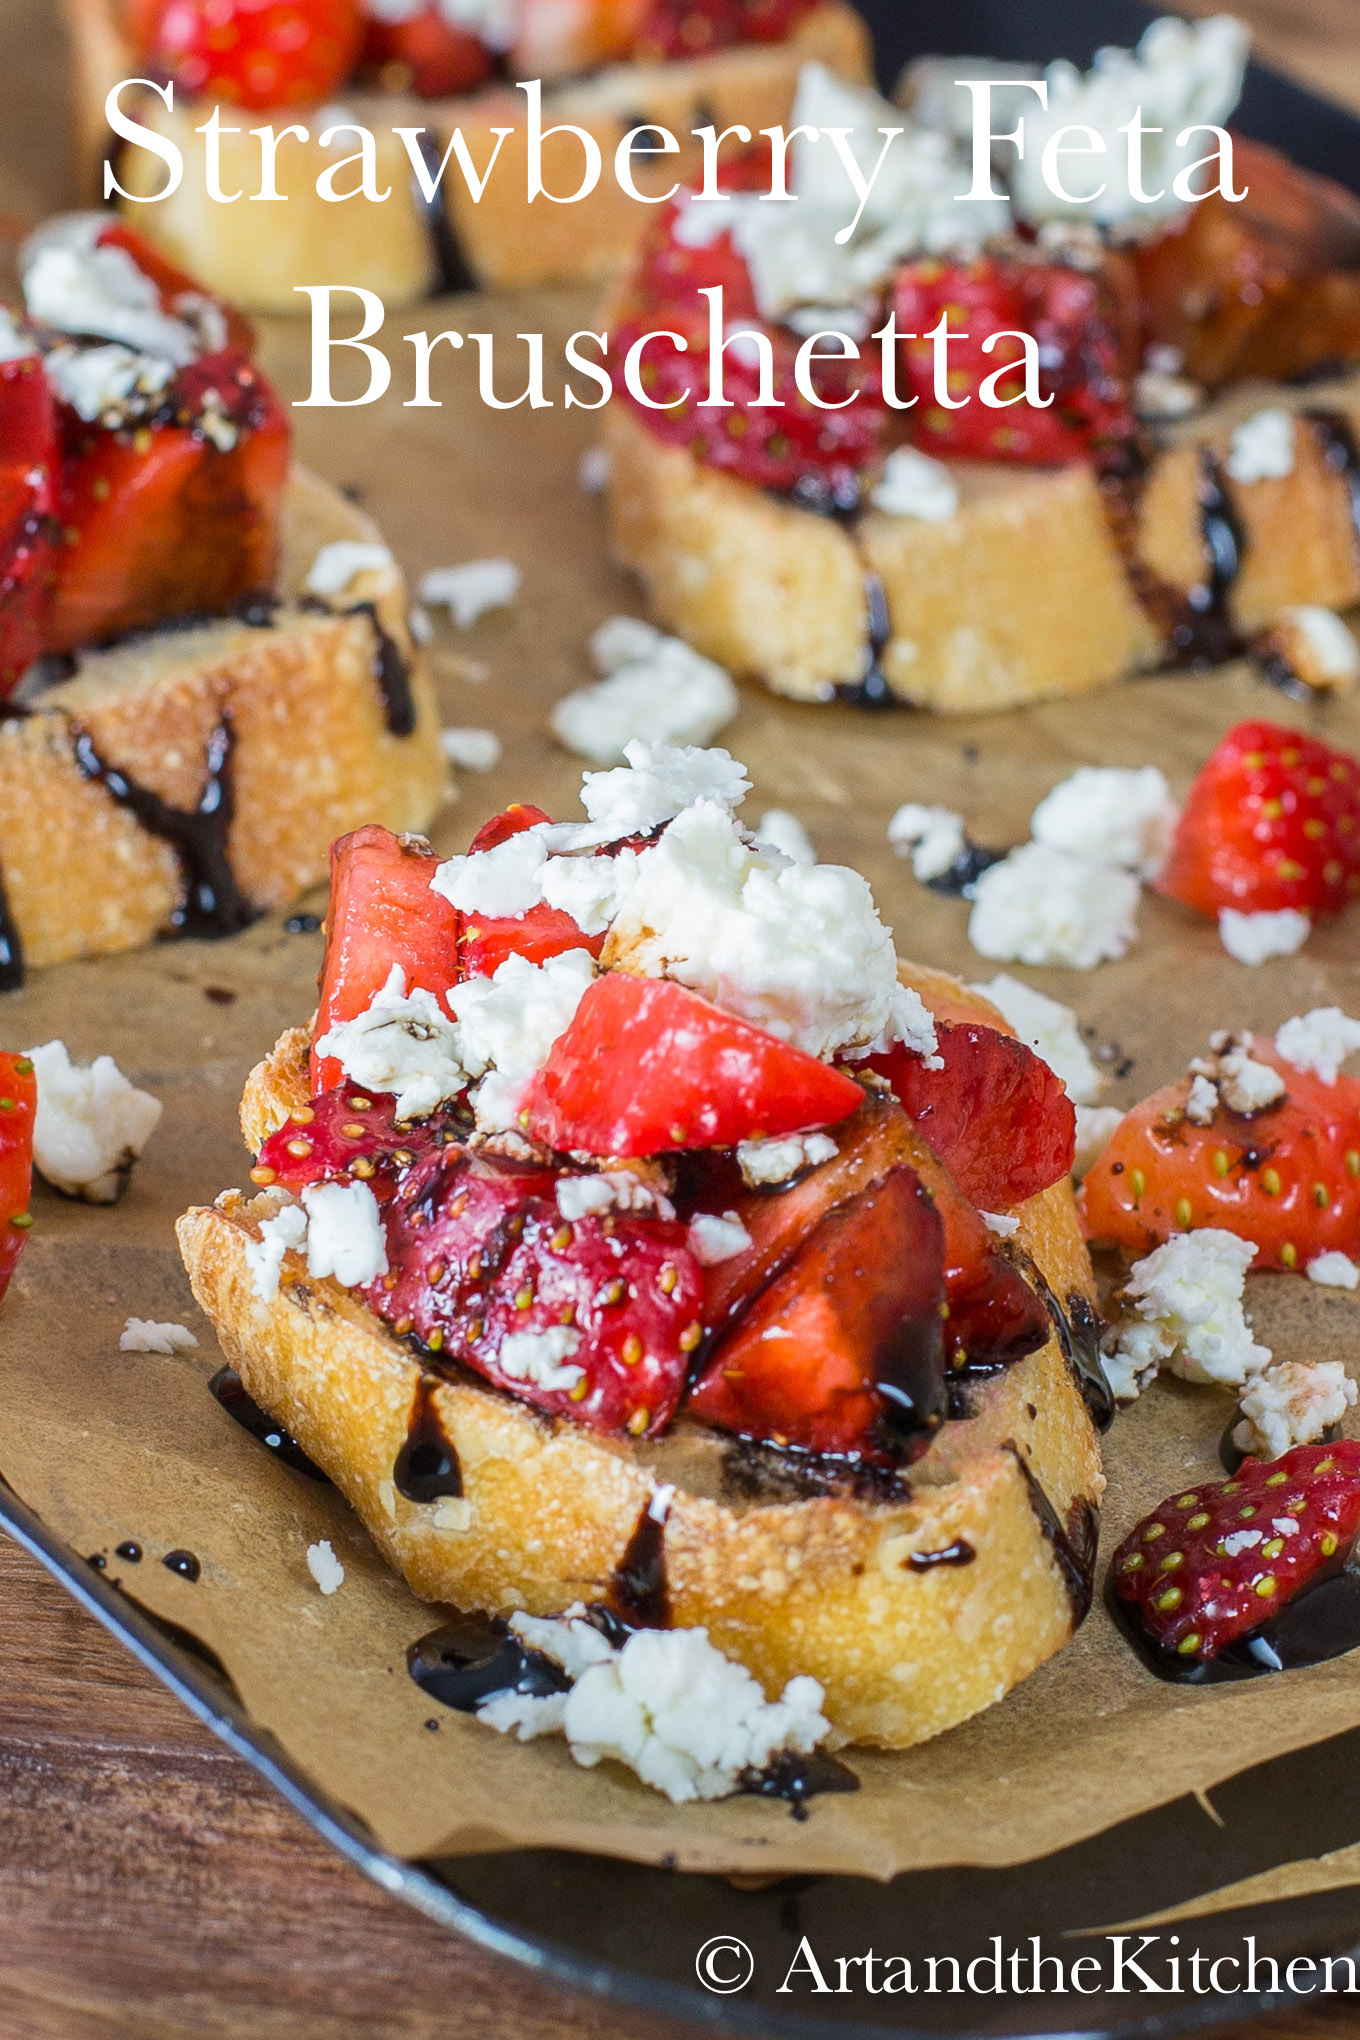 Strawberry Feta Bruschetta